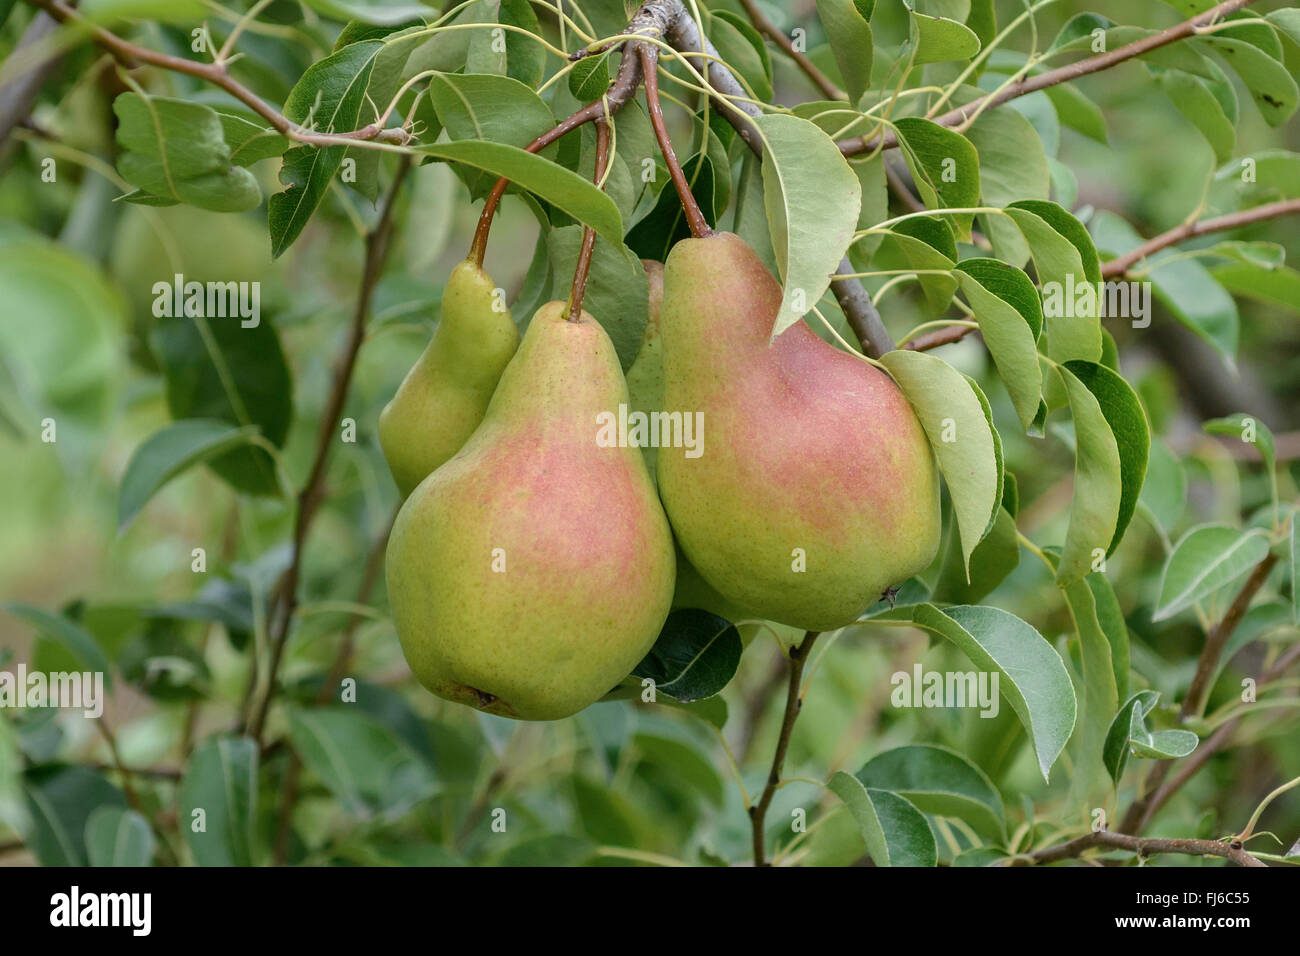 Common pear (Pyrus communis 'Armida', Pyrus communis Armida), pears on a tree, cultivar Armida, Germany Stock Photo